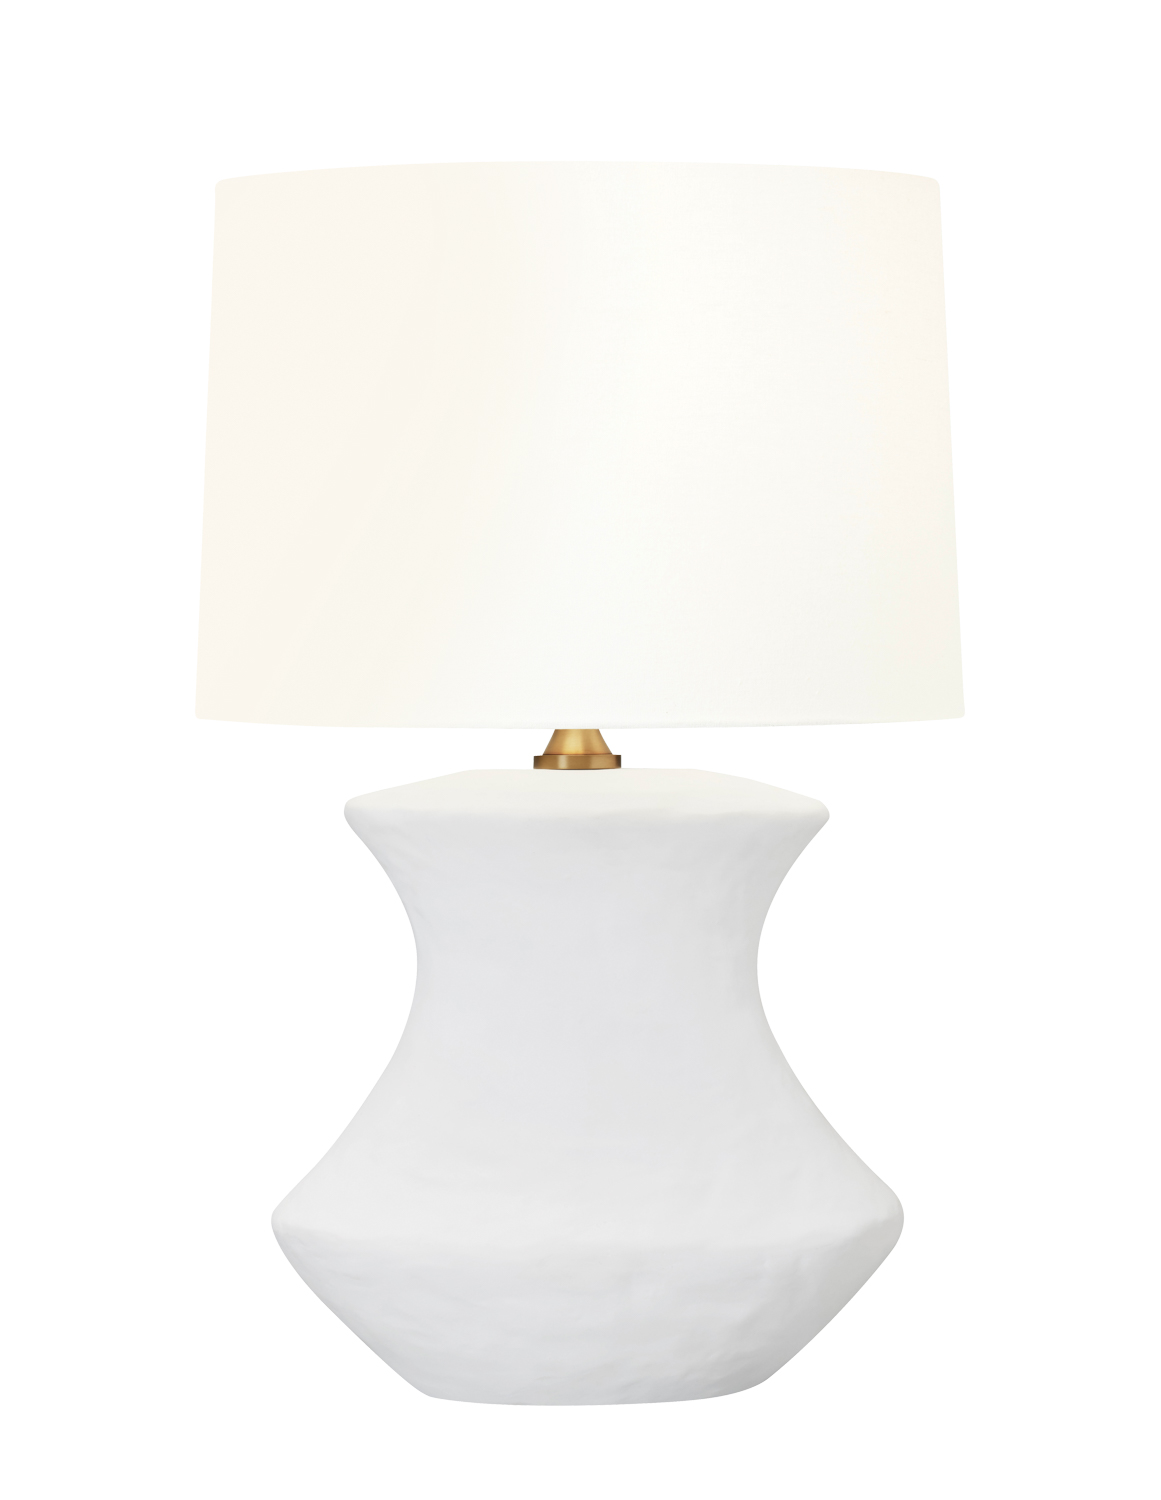 Curvy white ceramic lamp on white backdrop